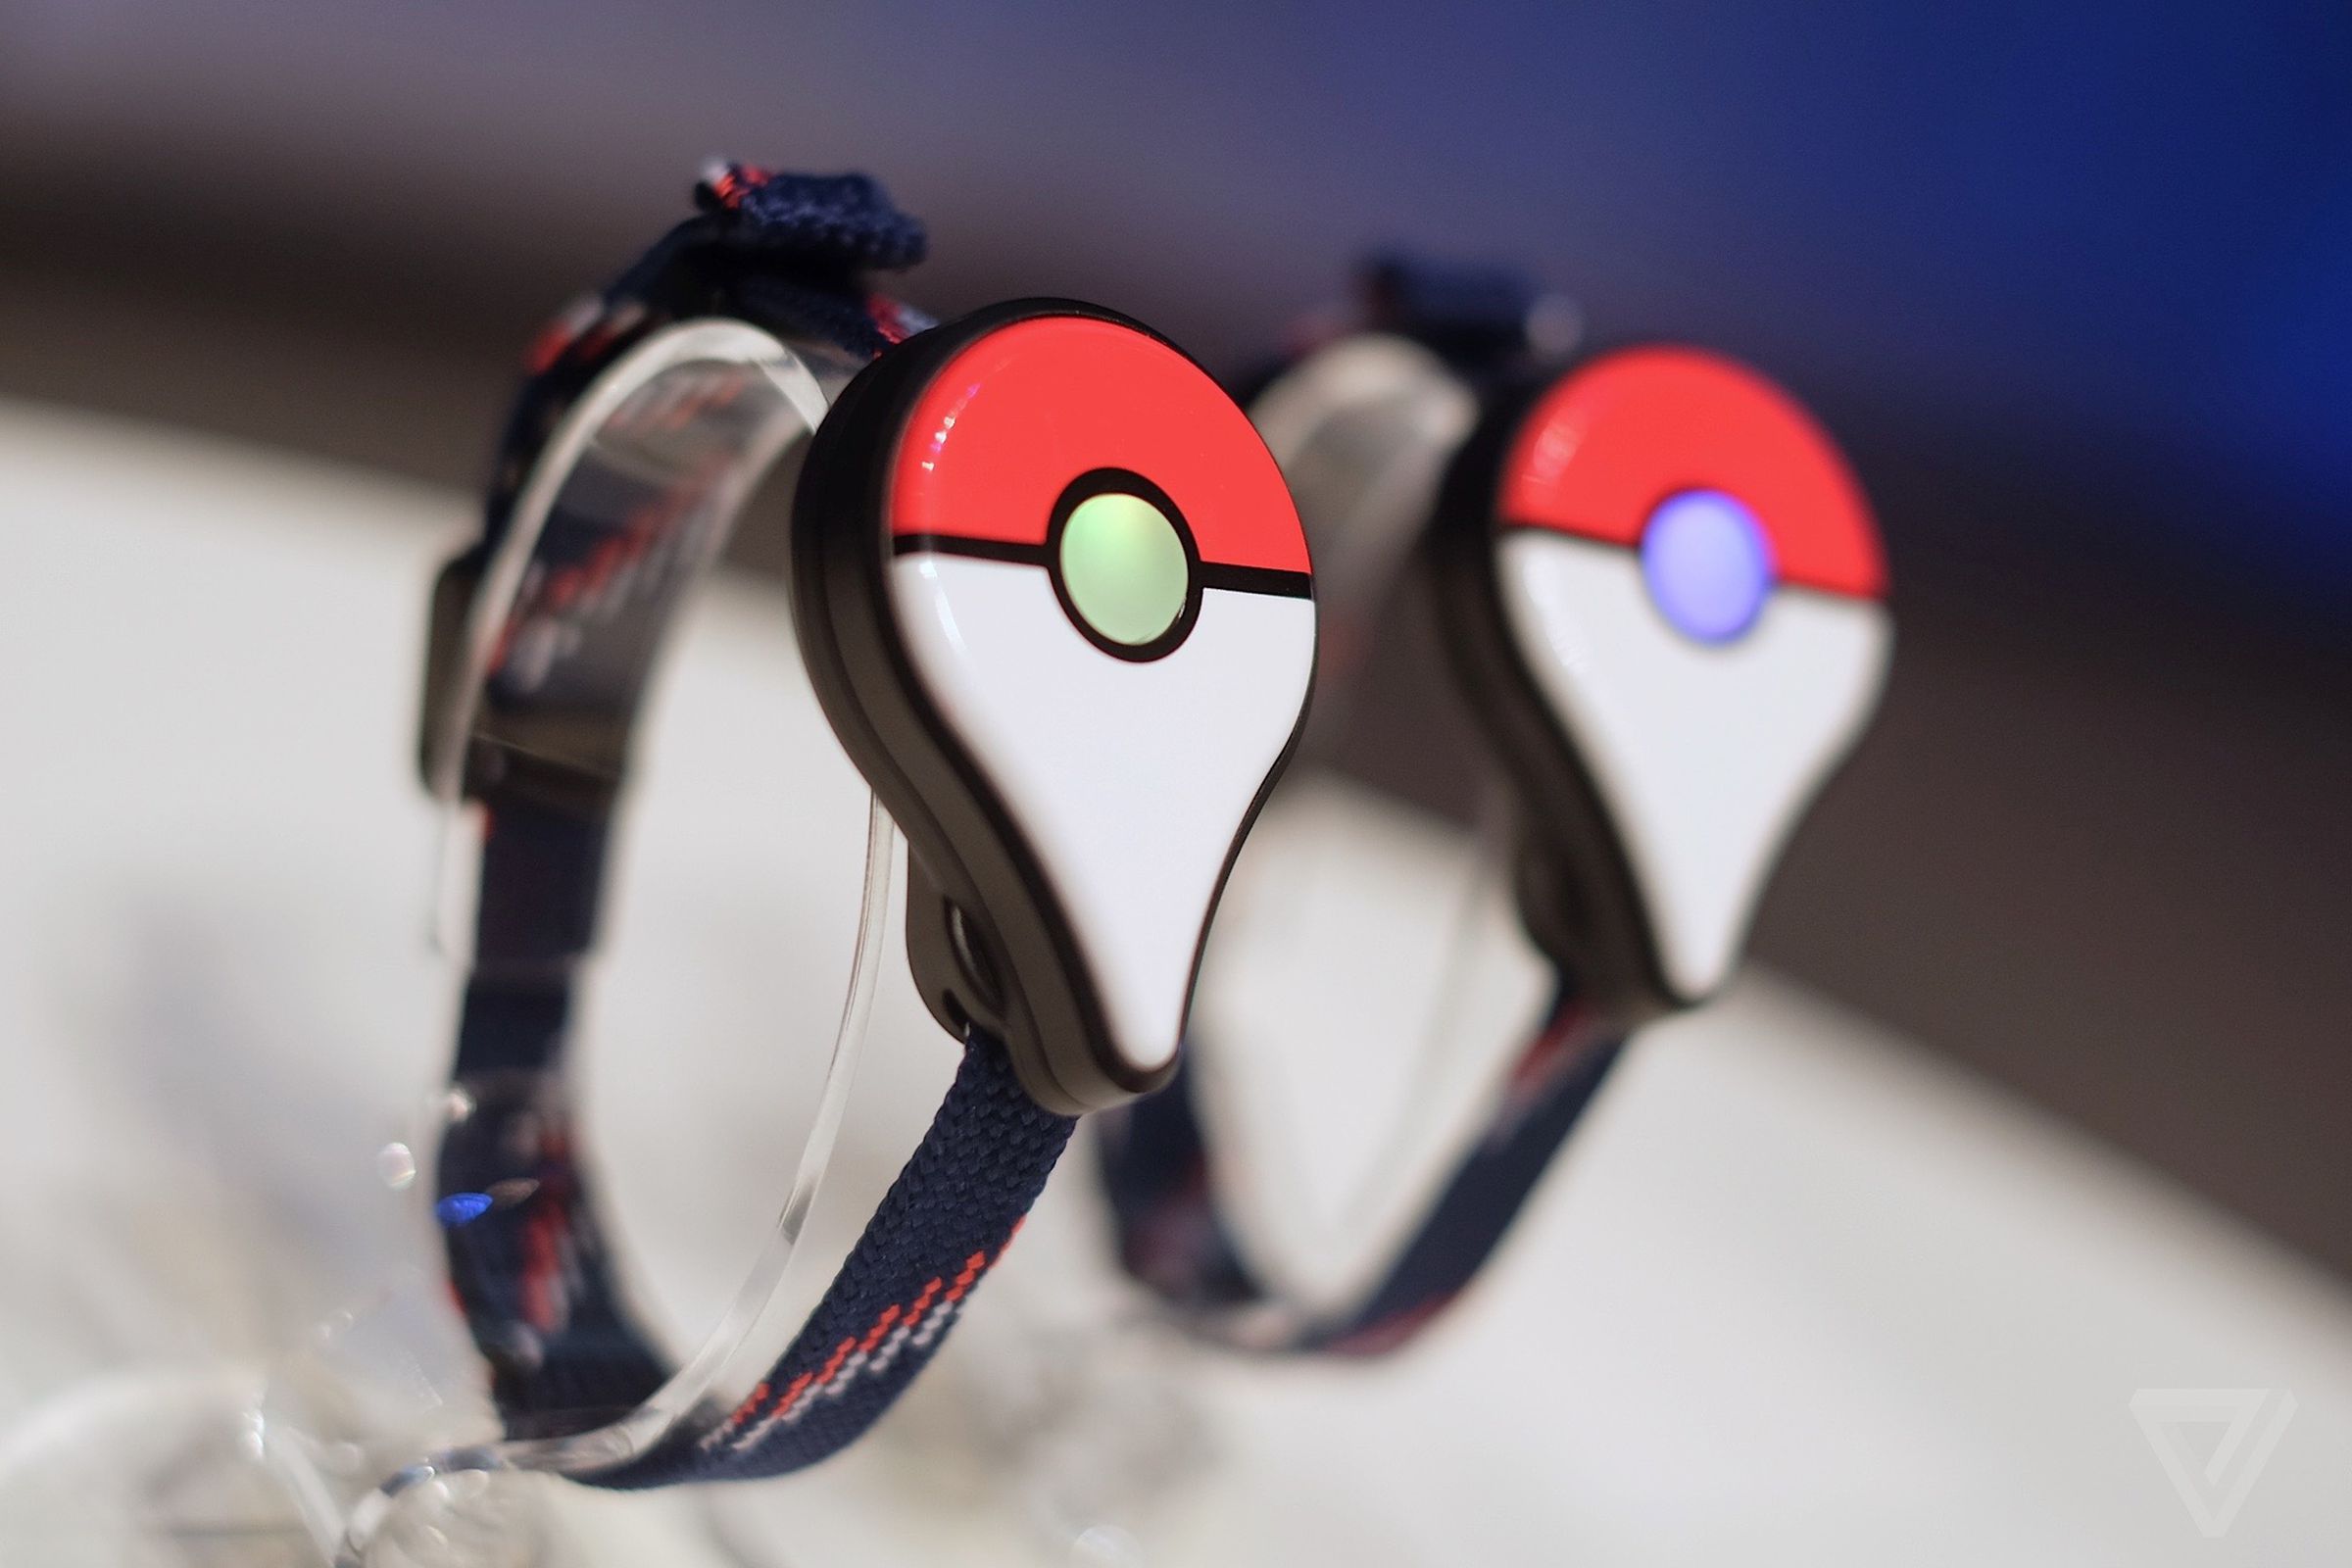 Photos of Nintendo's Pokémon Go Plus watch